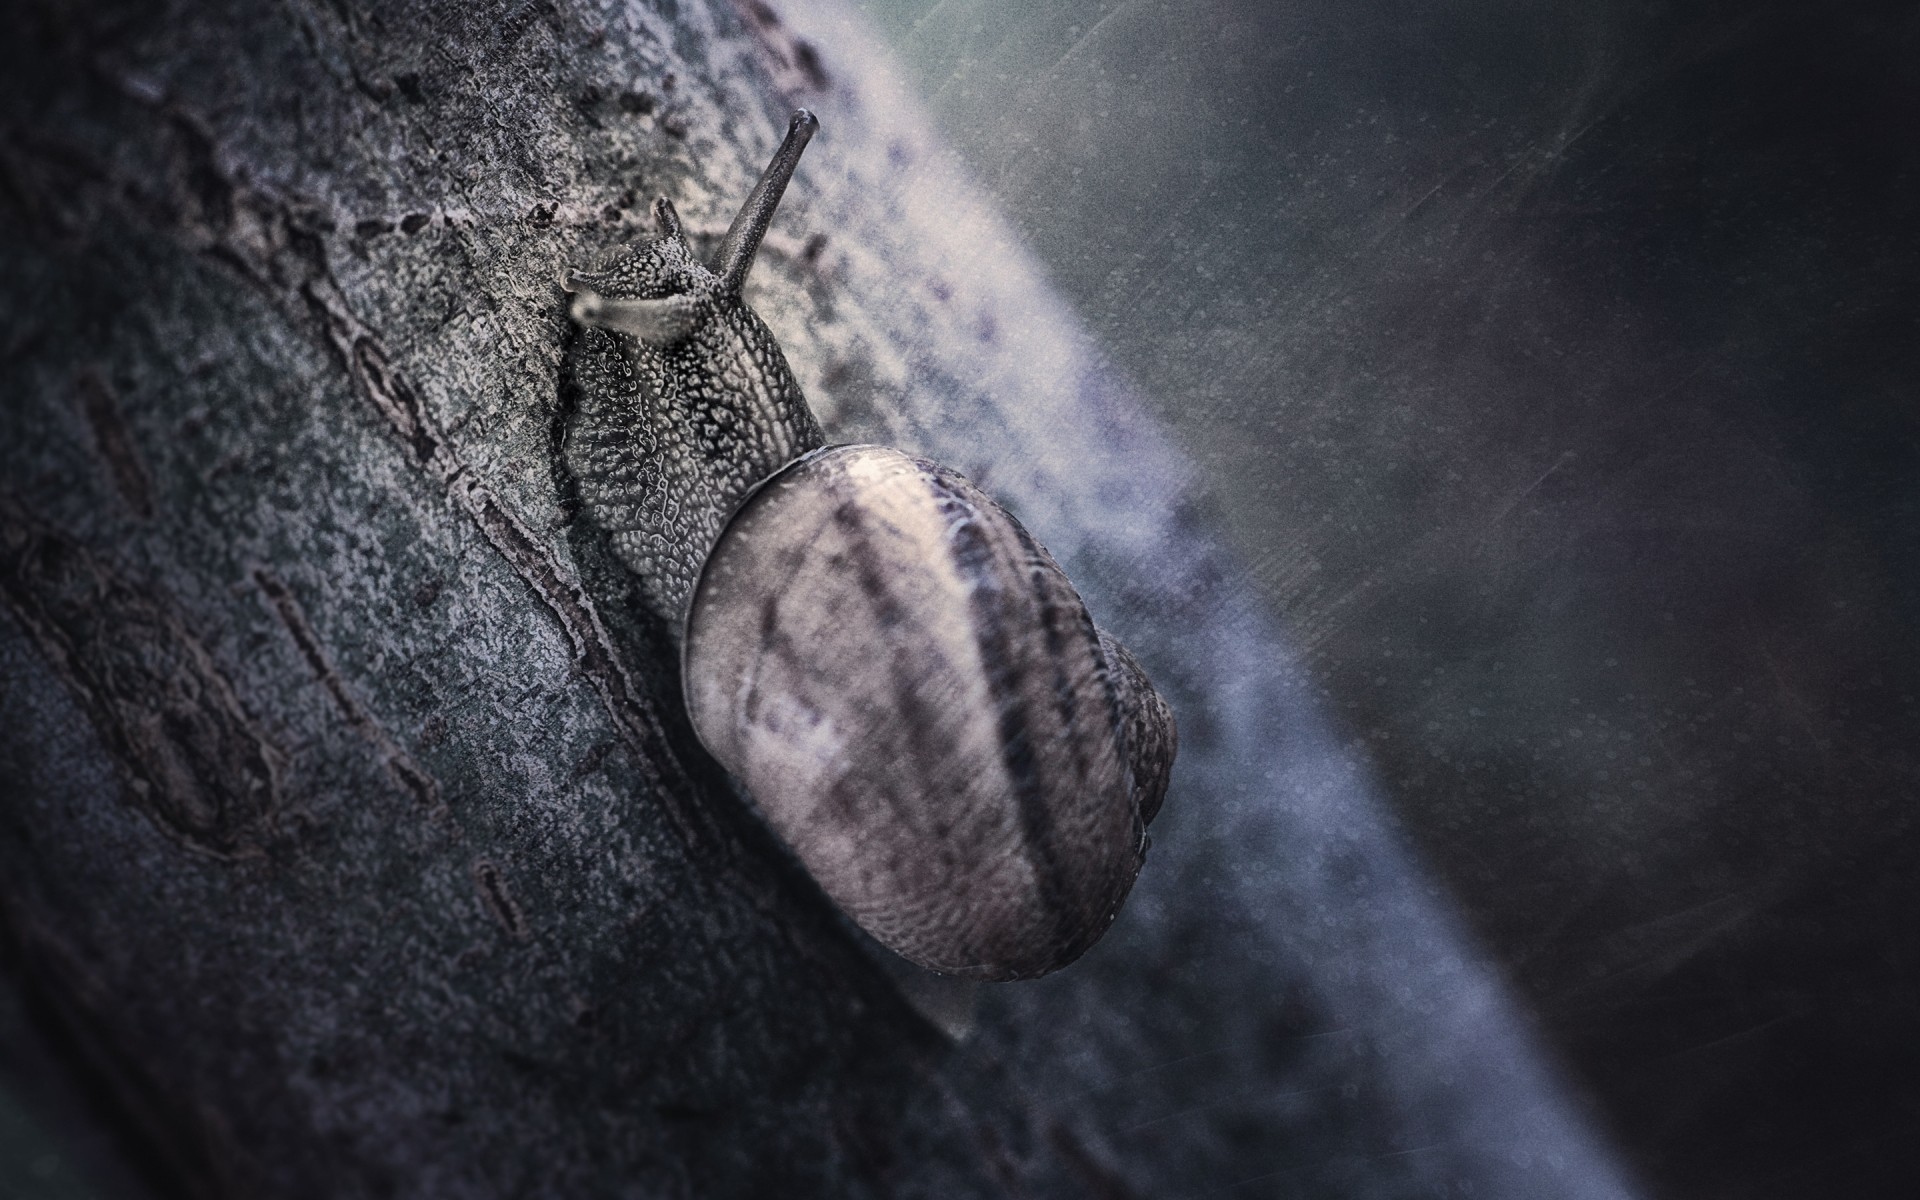 animals nature invertebrate desktop close-up snail